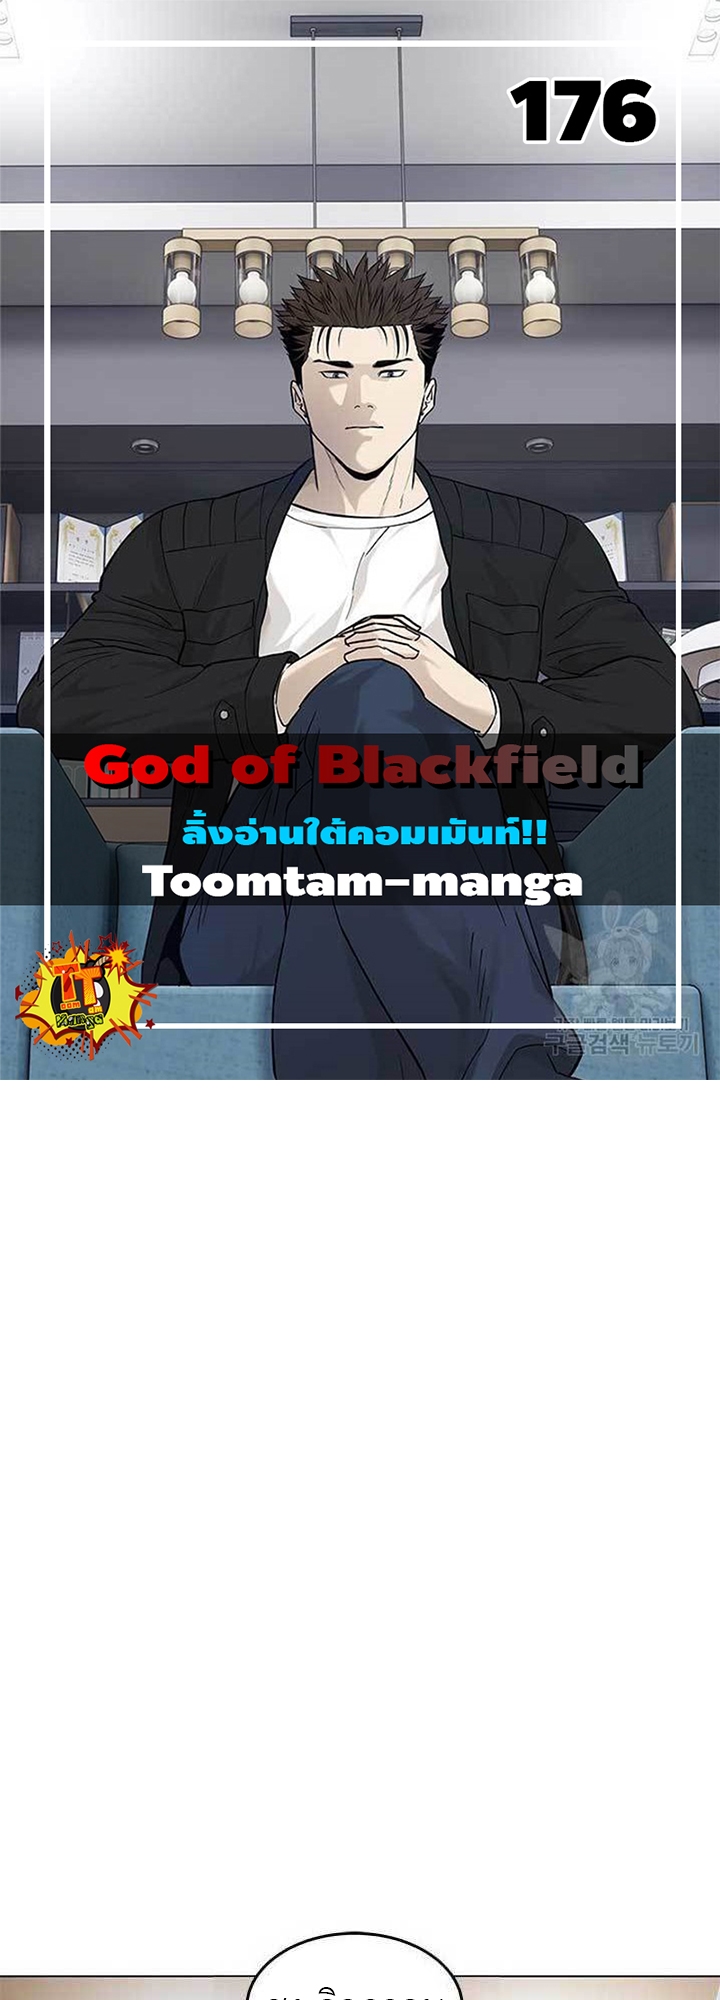 God of Blackfield 176 04 10 660001